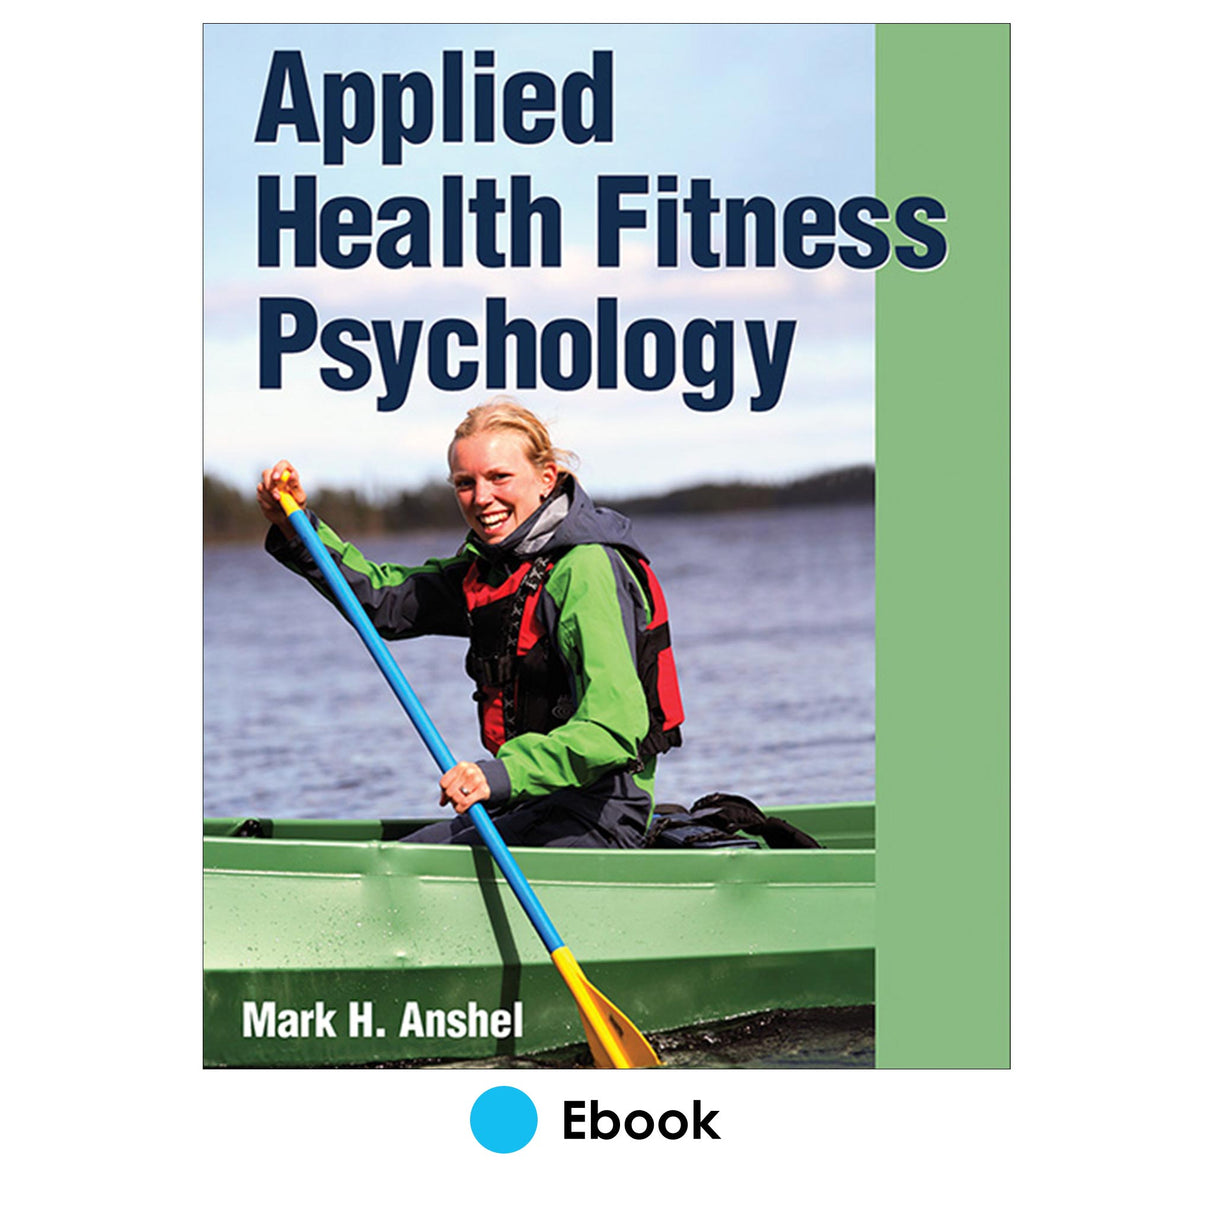 Applied Health Fitness Psychology PDF